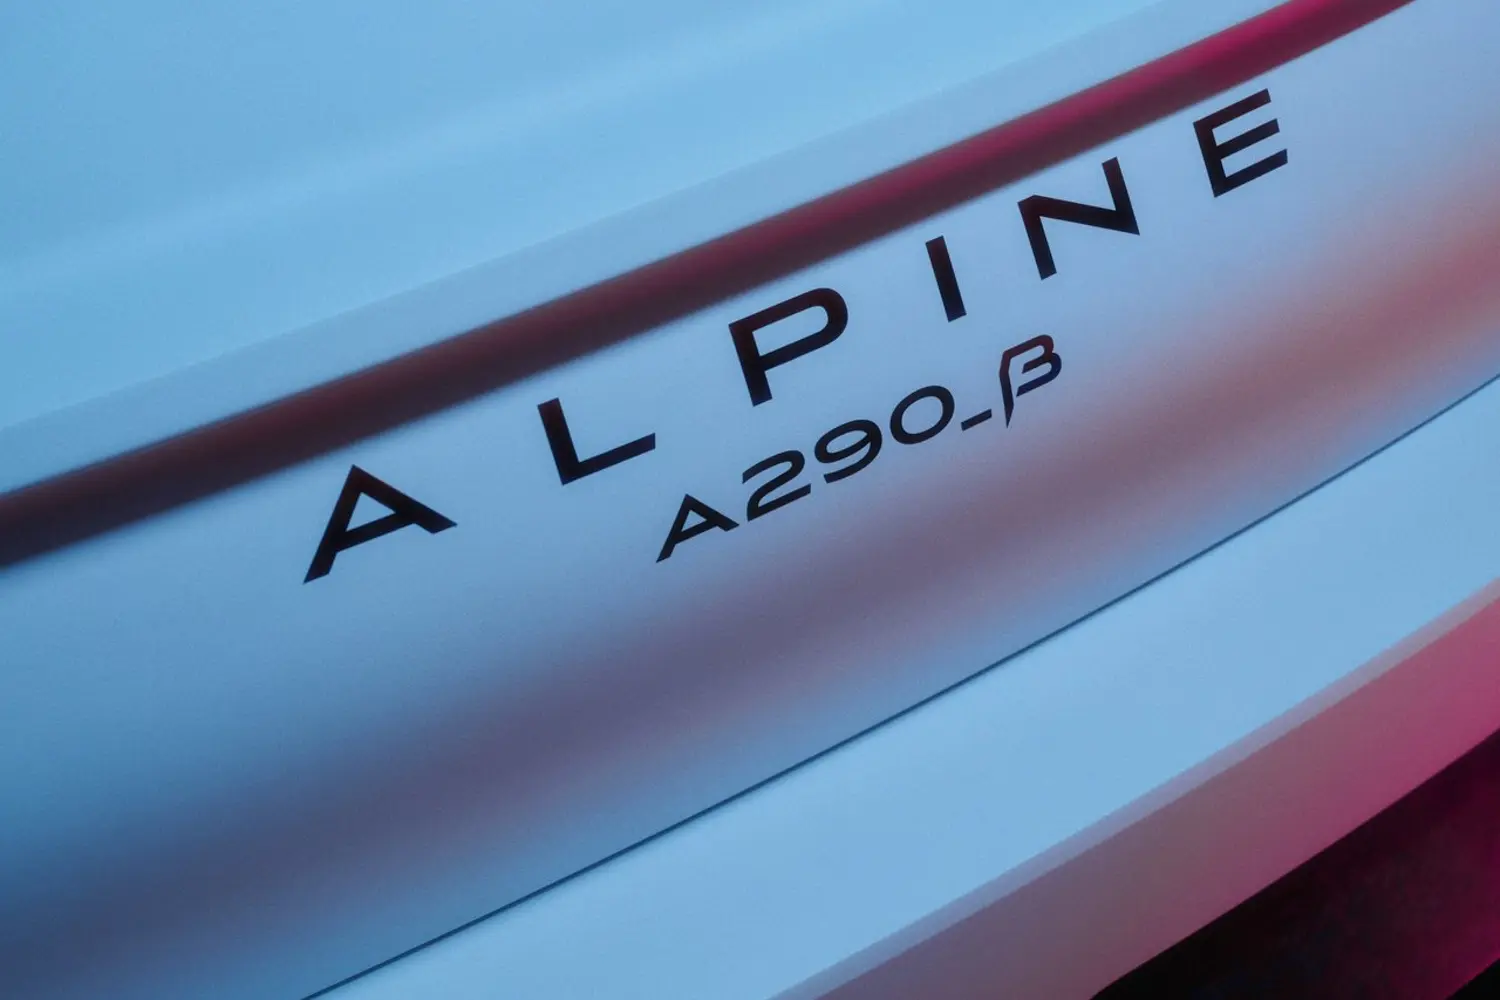 Alpine A290 Beta